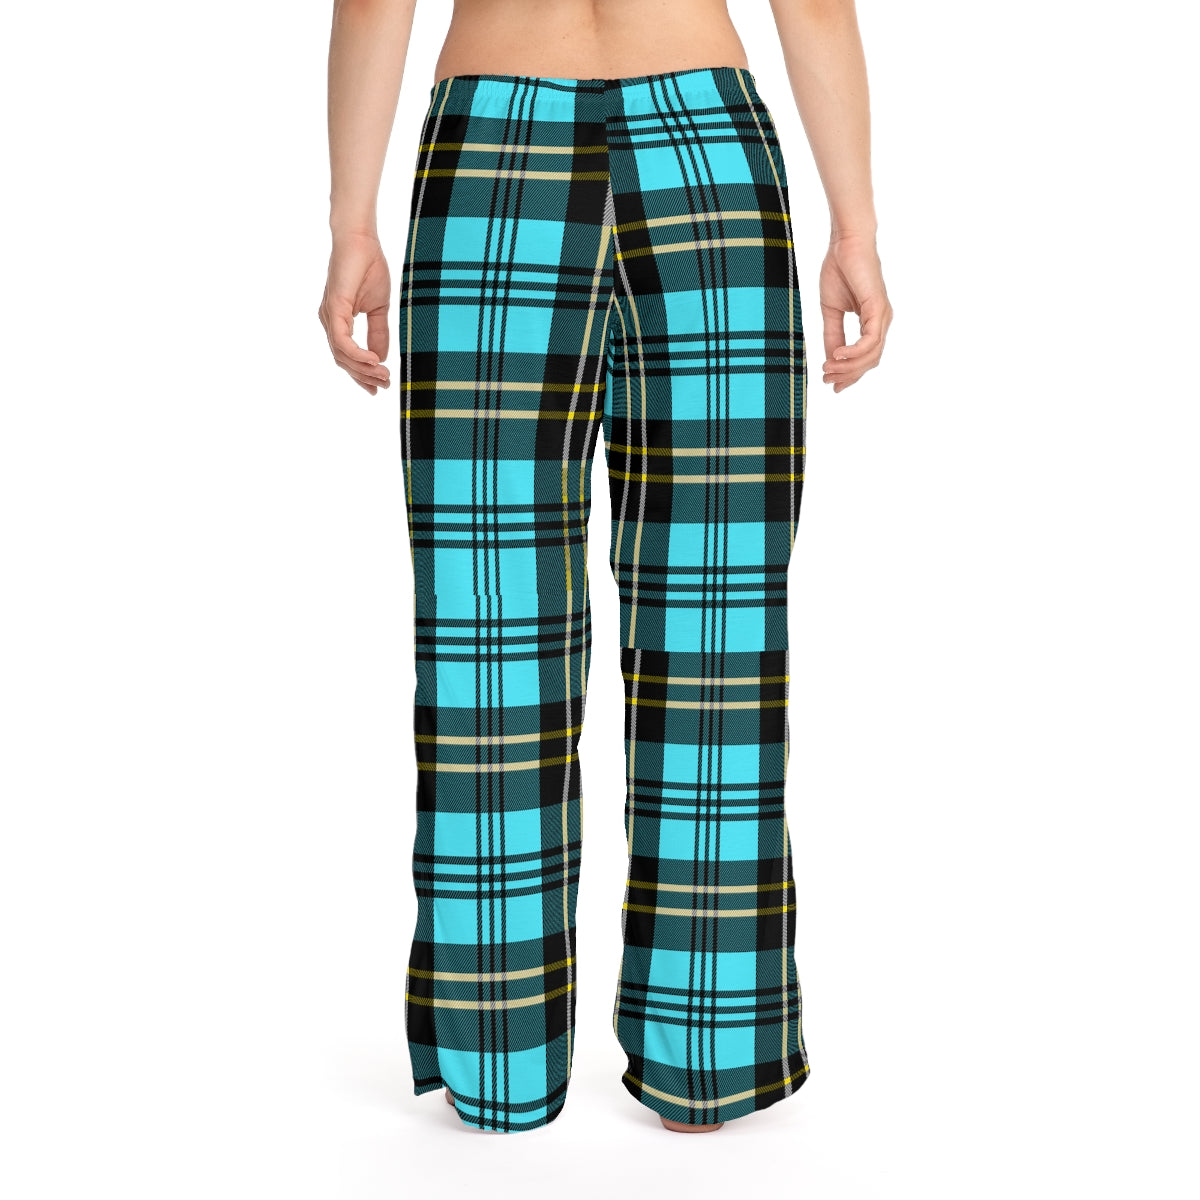 Women's Blue Check Pajama Pants Loungewear, Cute Lounge Pants Holiday